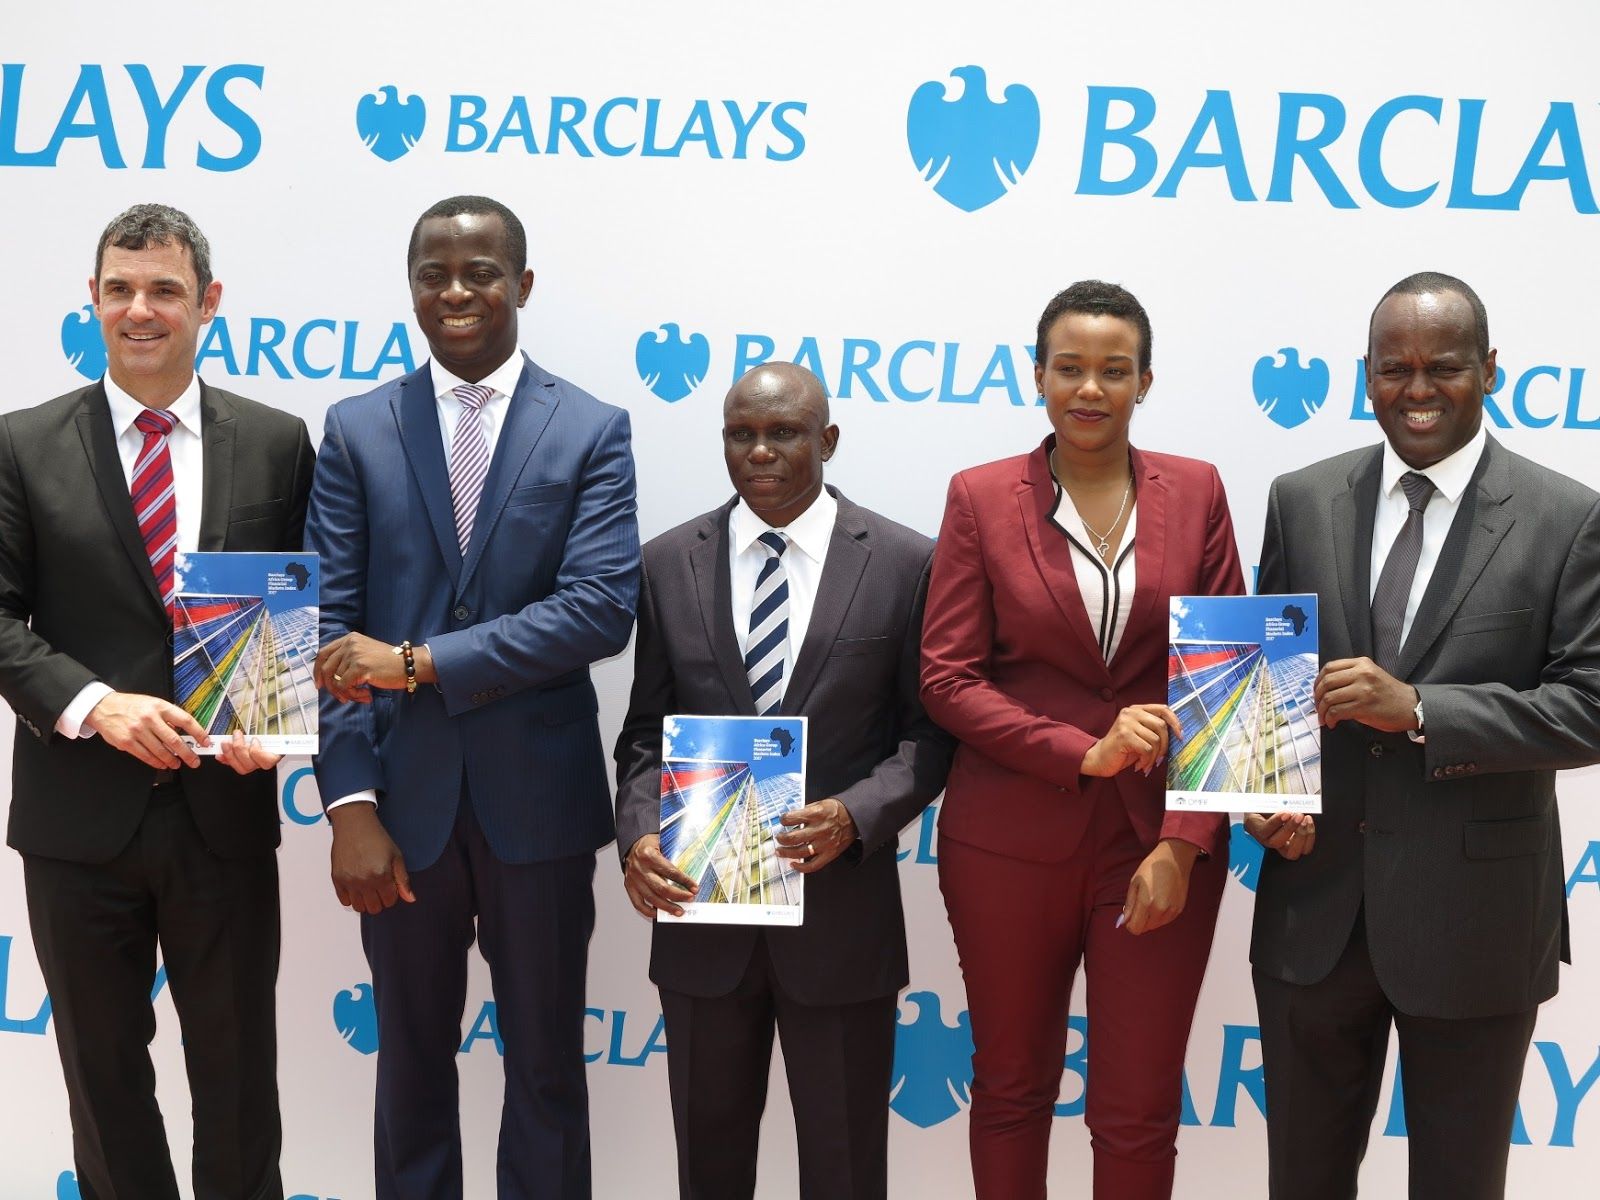 Barclays executives jointly display a new financial market service. Image Credit: Brazuka Kibenki